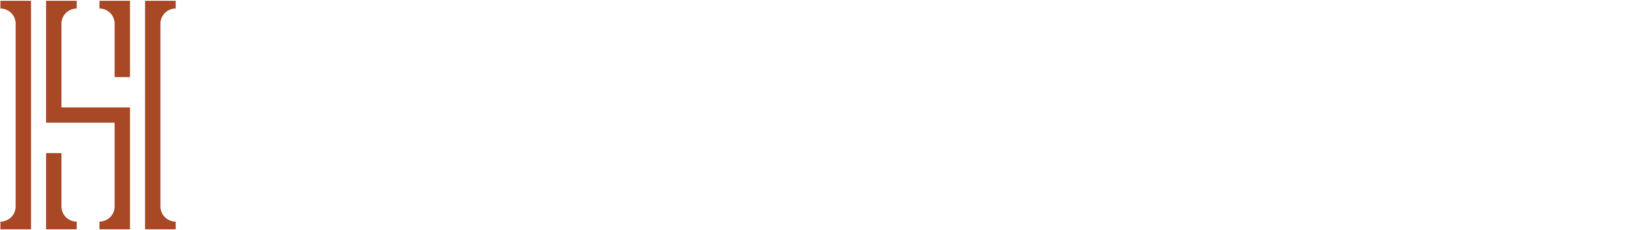 Marca del logotipo de Harris Sliwoski